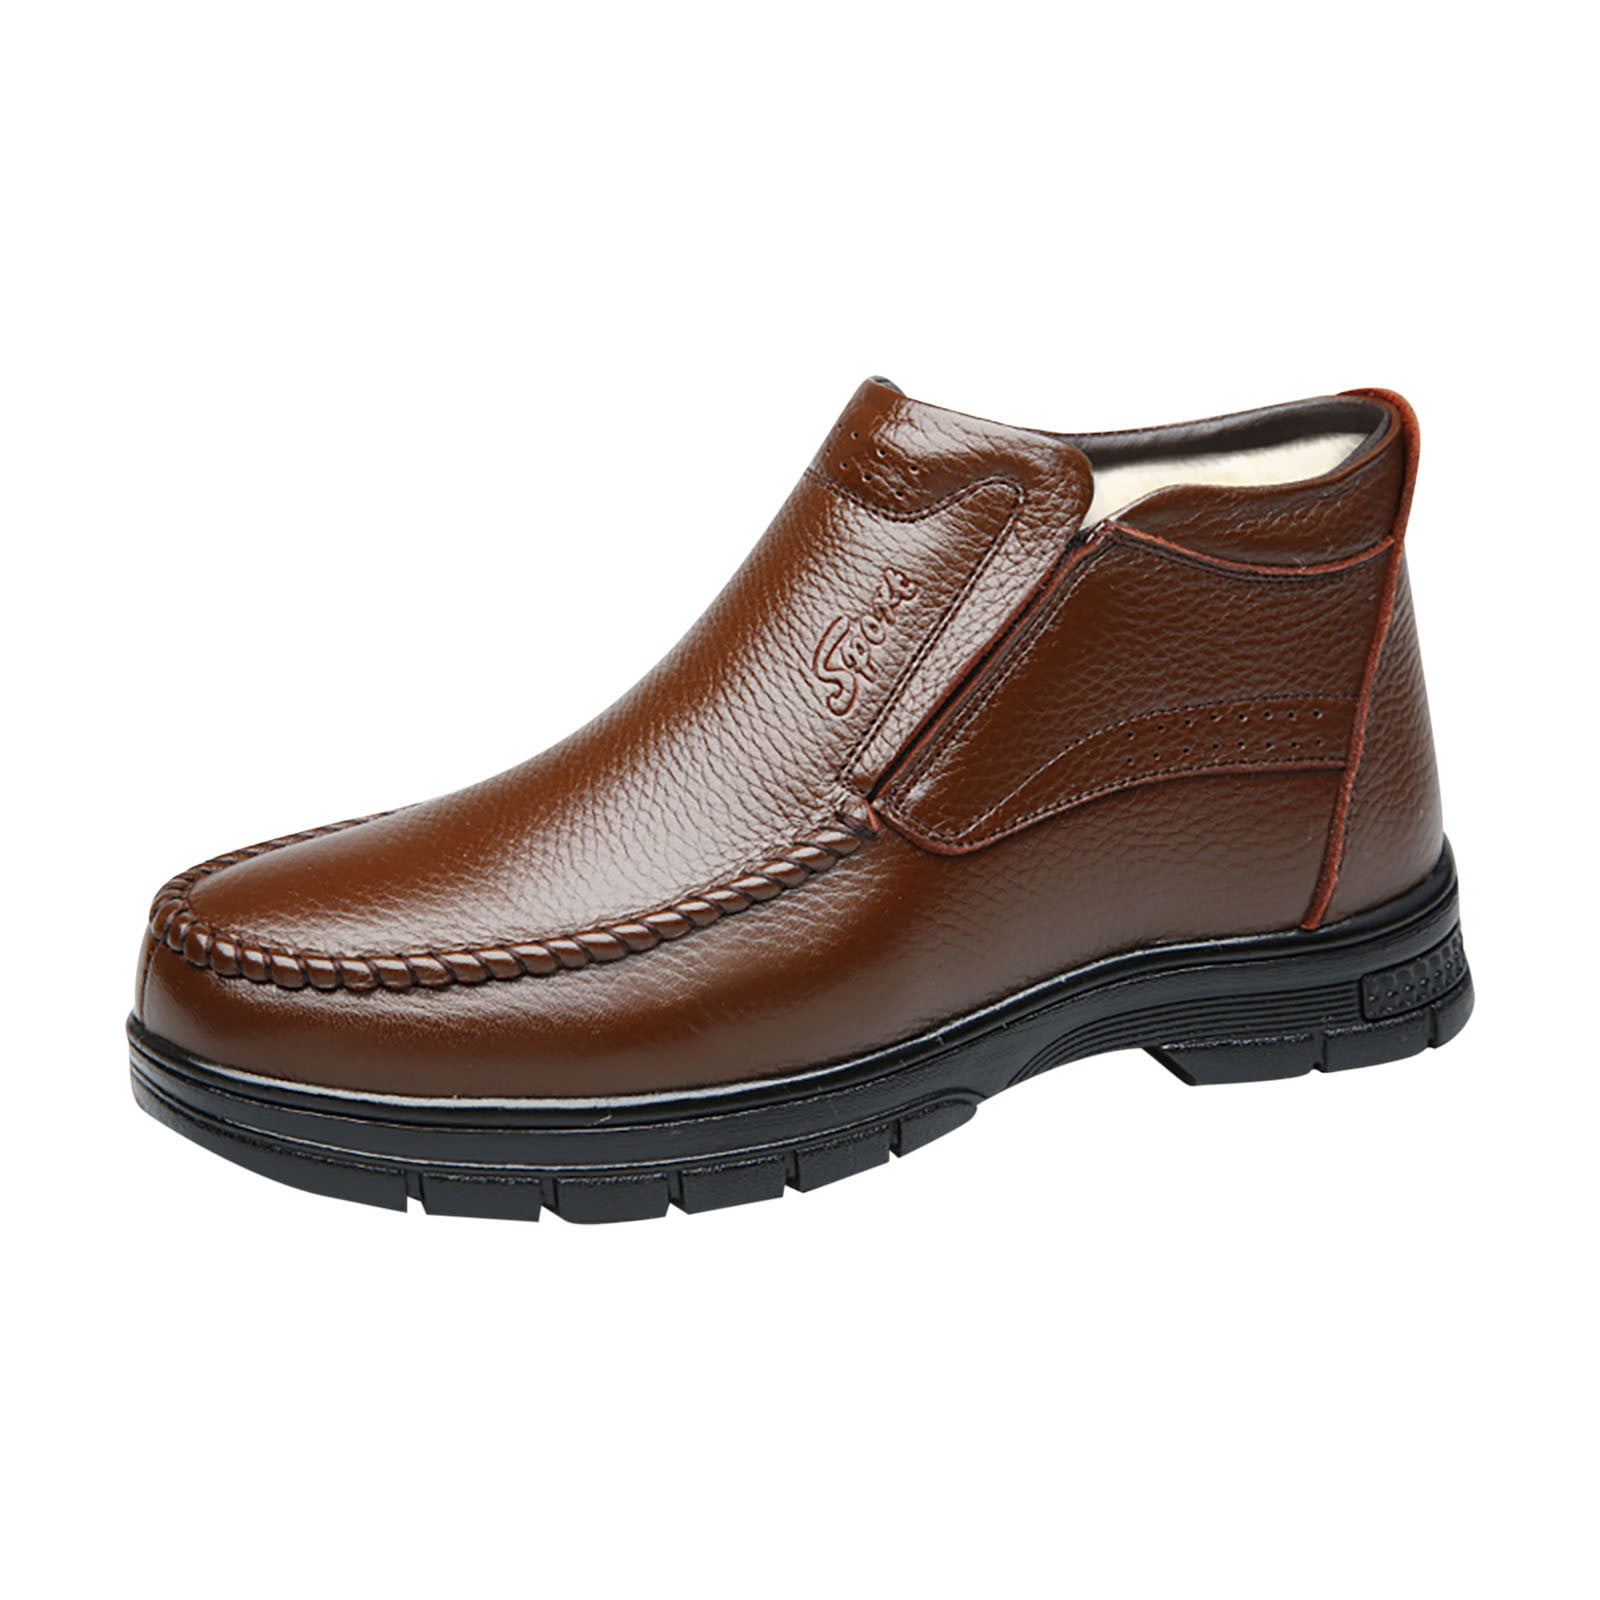 Men's Boots | Black, Chelsea & Leather Boots | ASOS